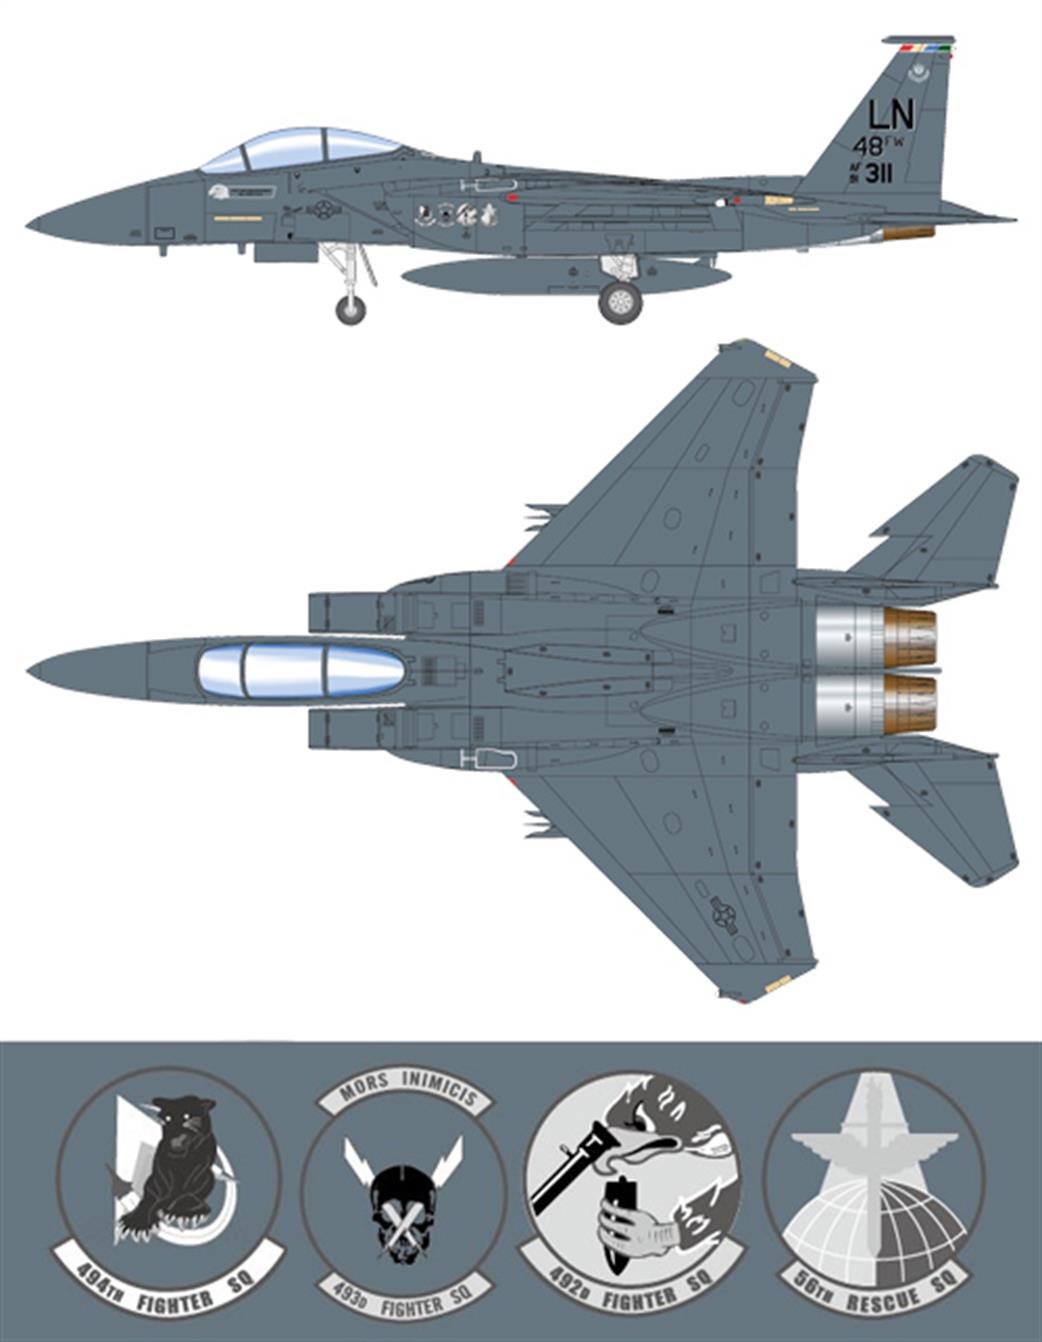 Easy Model 33301 F-15E Strike Eagle 91-311 LN 48FW Plastic Display Model 1/72